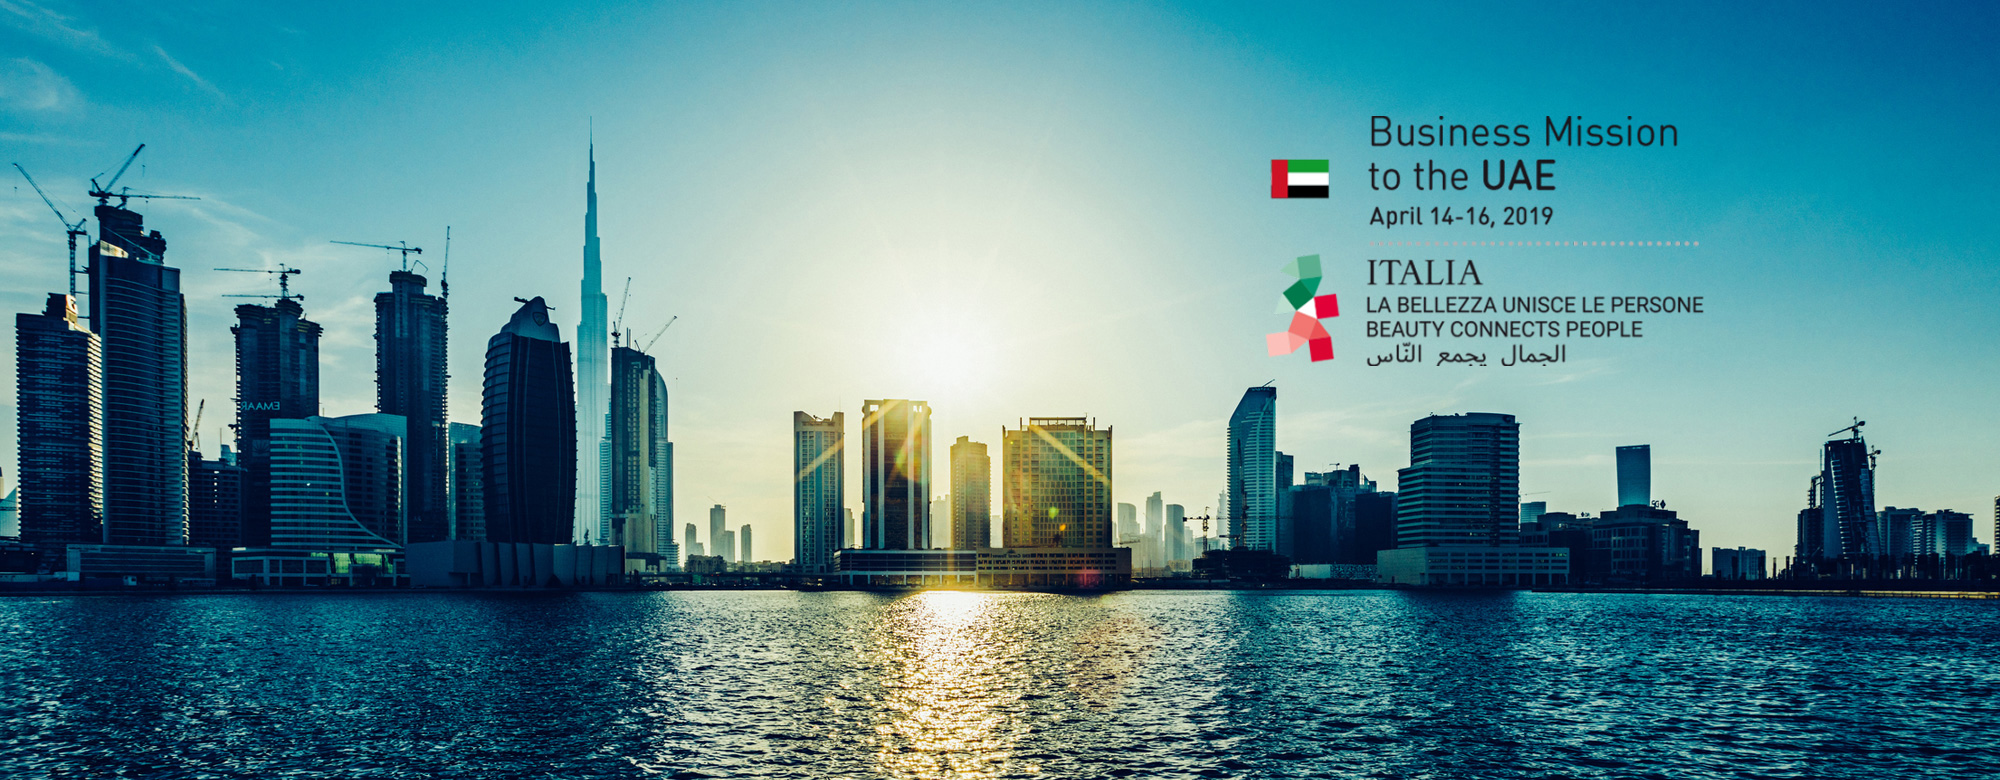 Emirati Arabi Uniti: Missione Imprenditoriale a Dubai e Abu Dhabi, 14-16 aprile